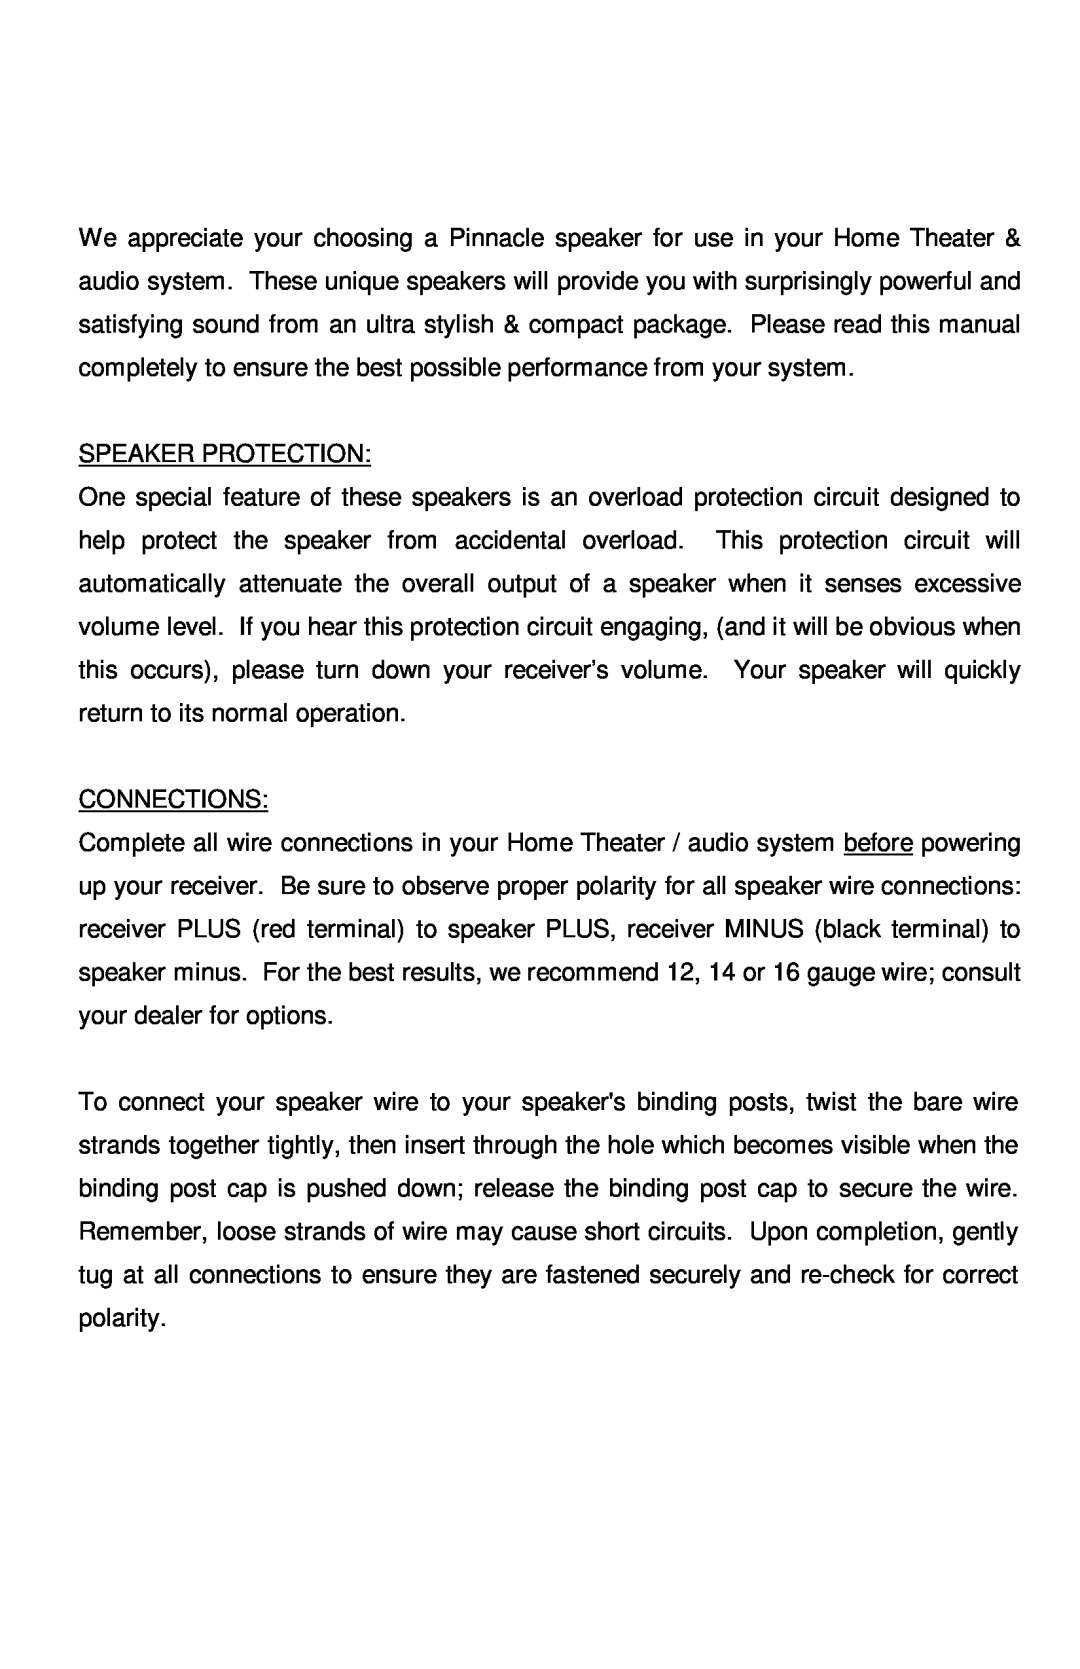 Pinnacle Speakers G0591 manual Speaker Protection, Connections 